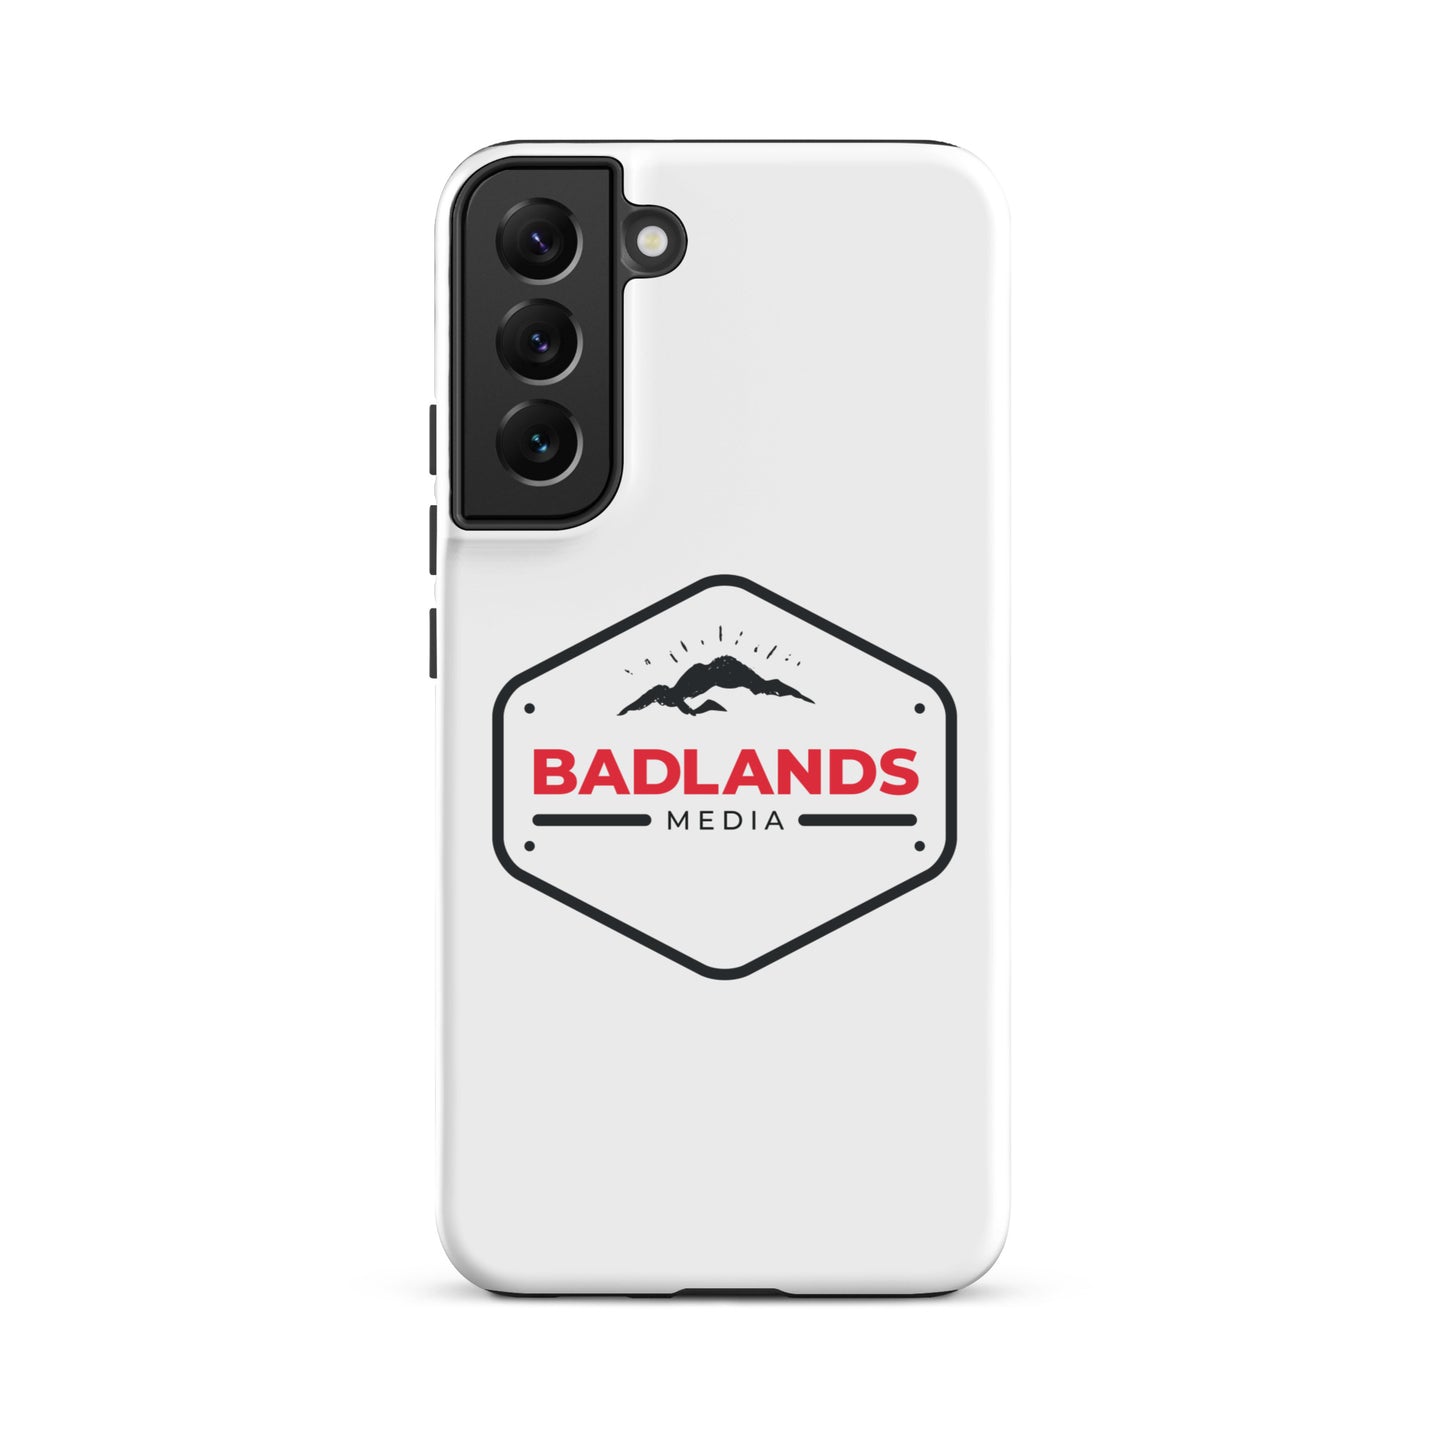 Badlands Tough case for Samsung® in white